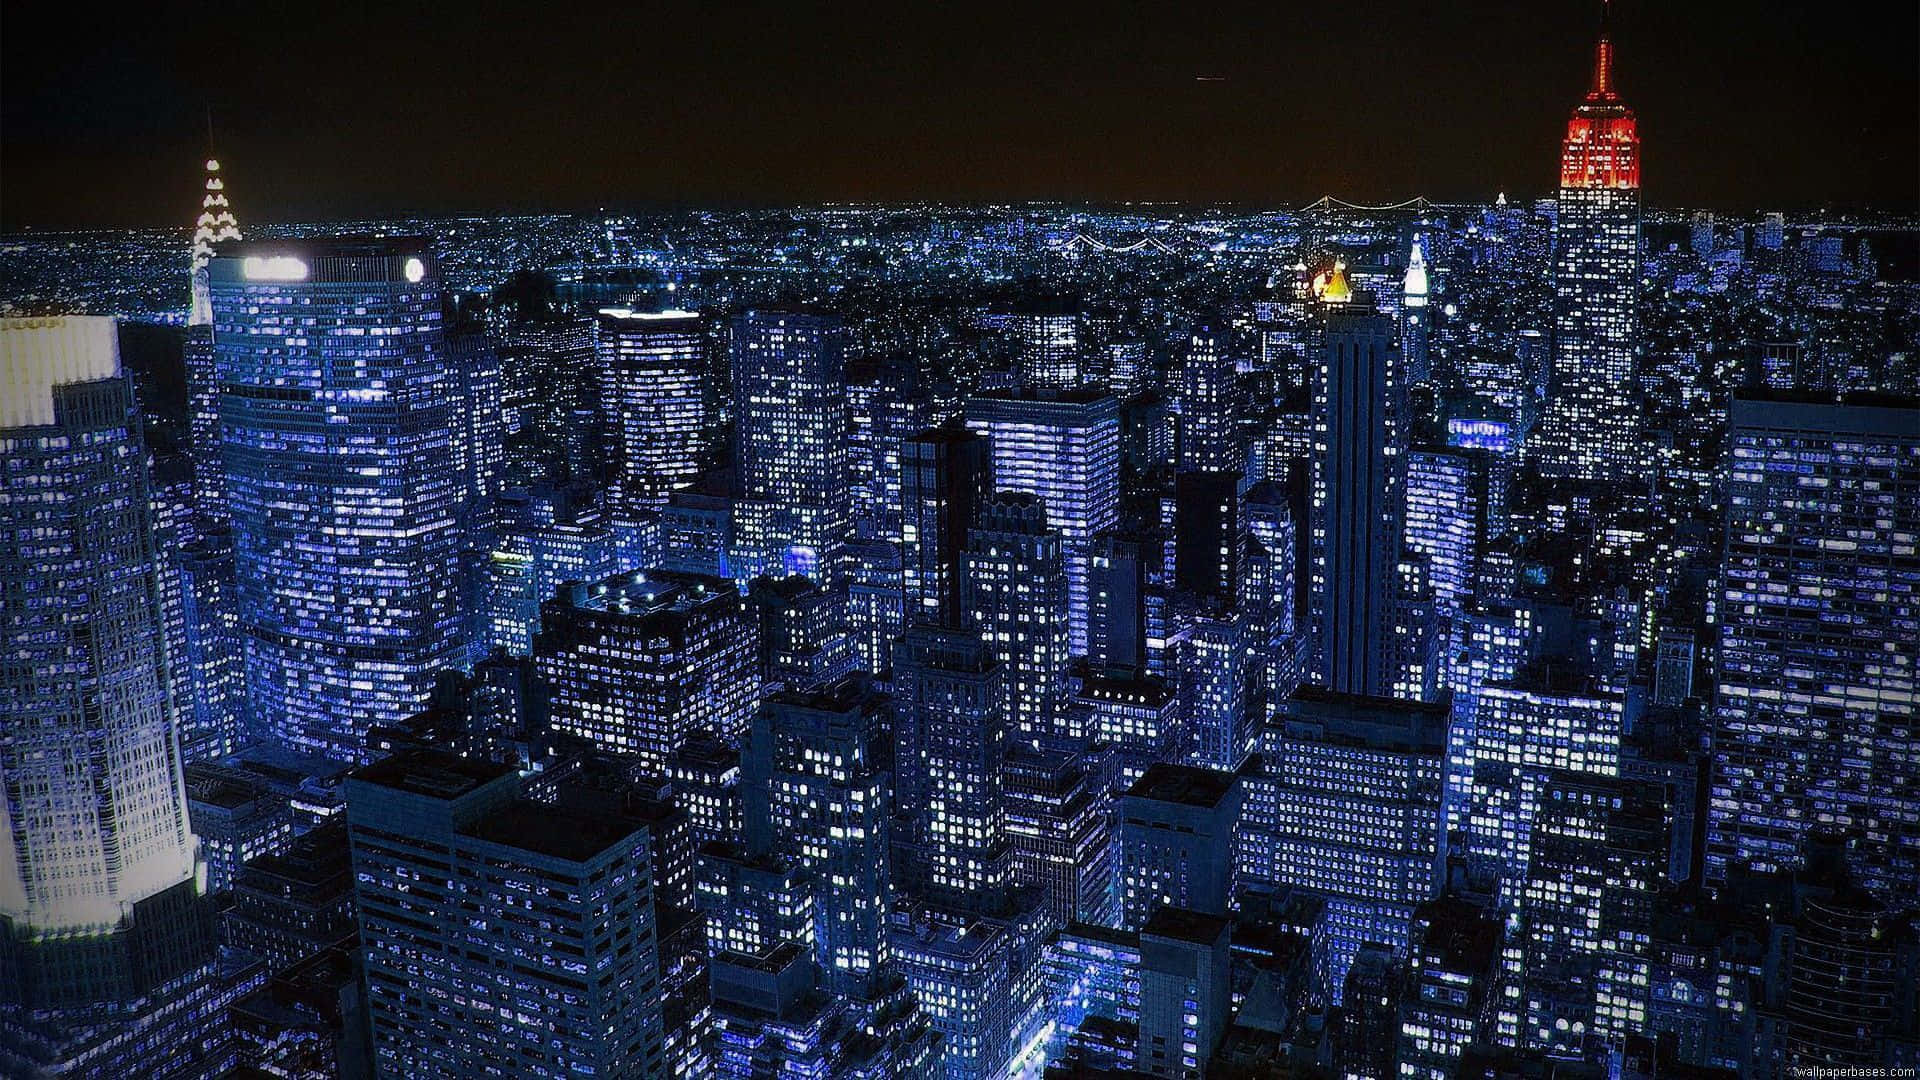 Utforskadet Livliga Nattlivet I Night City Som Bakgrundsbild På Din Dator Eller Mobiltelefon.